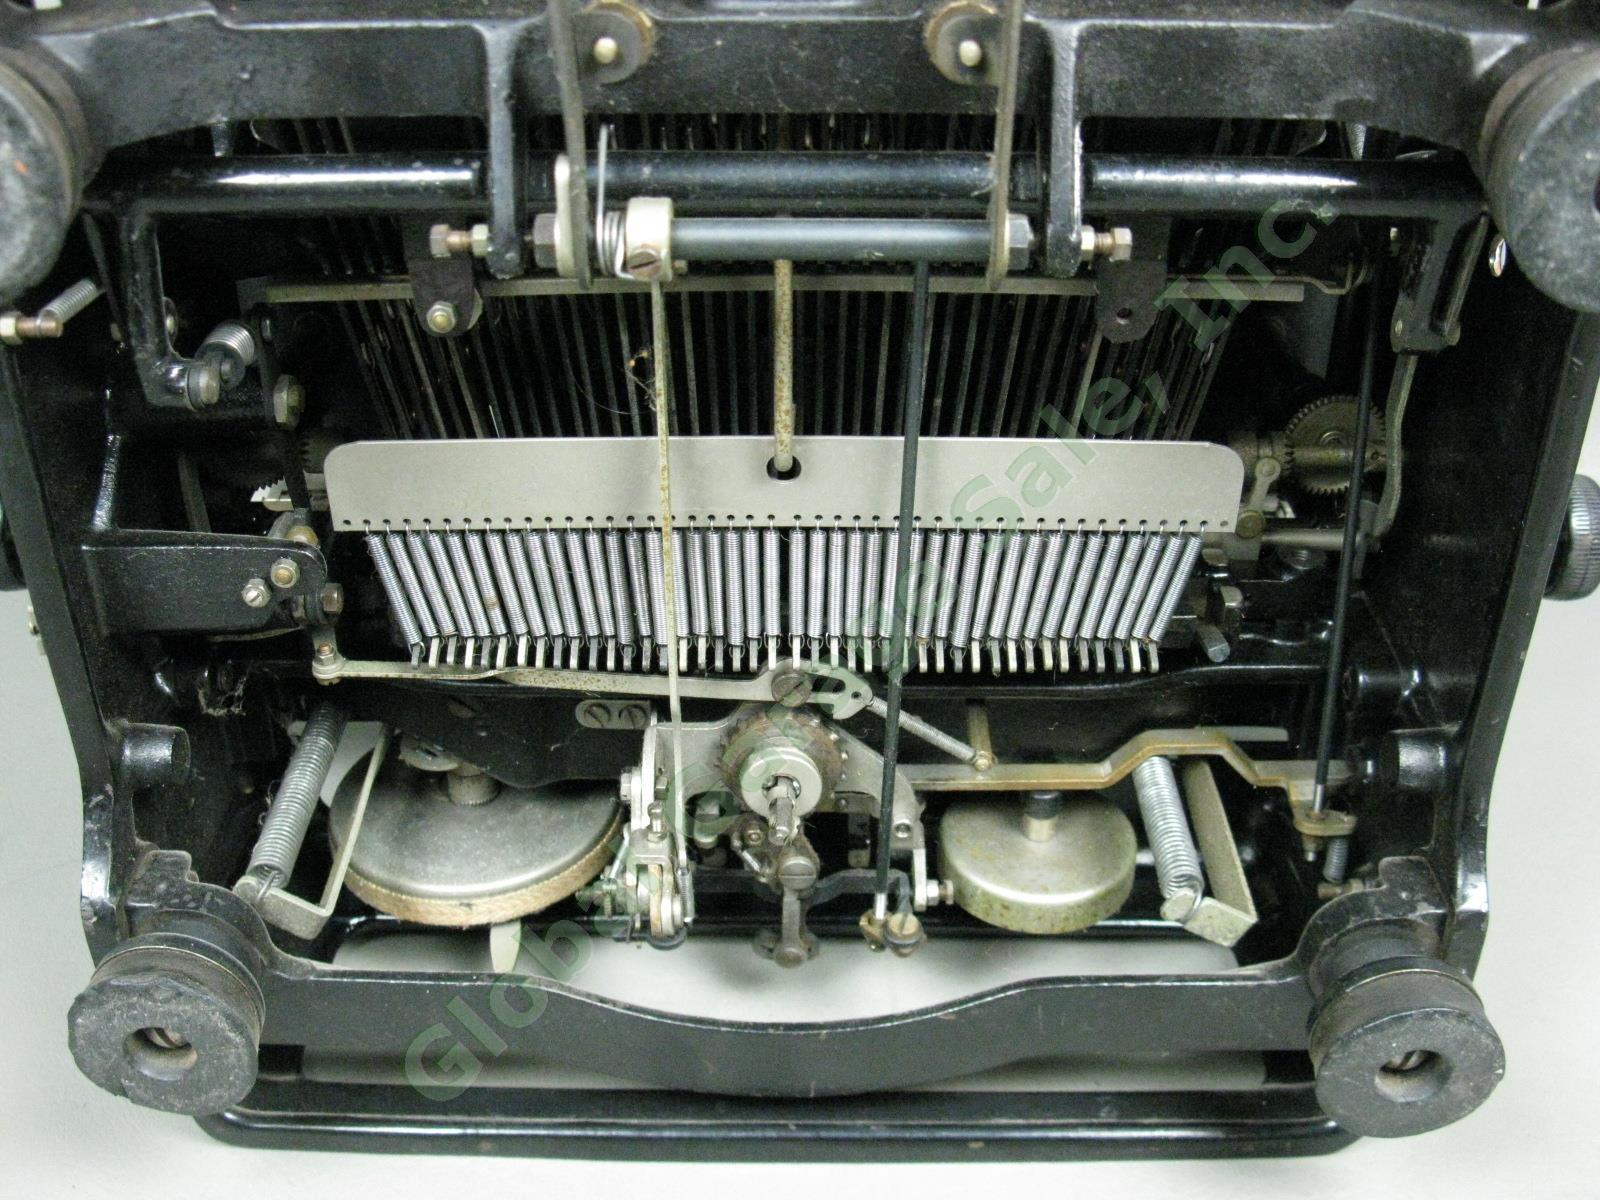 Vtg Antique 1929 Remington Noiseless 6 Manual Typewriter Serial X117909 Cleaned 10